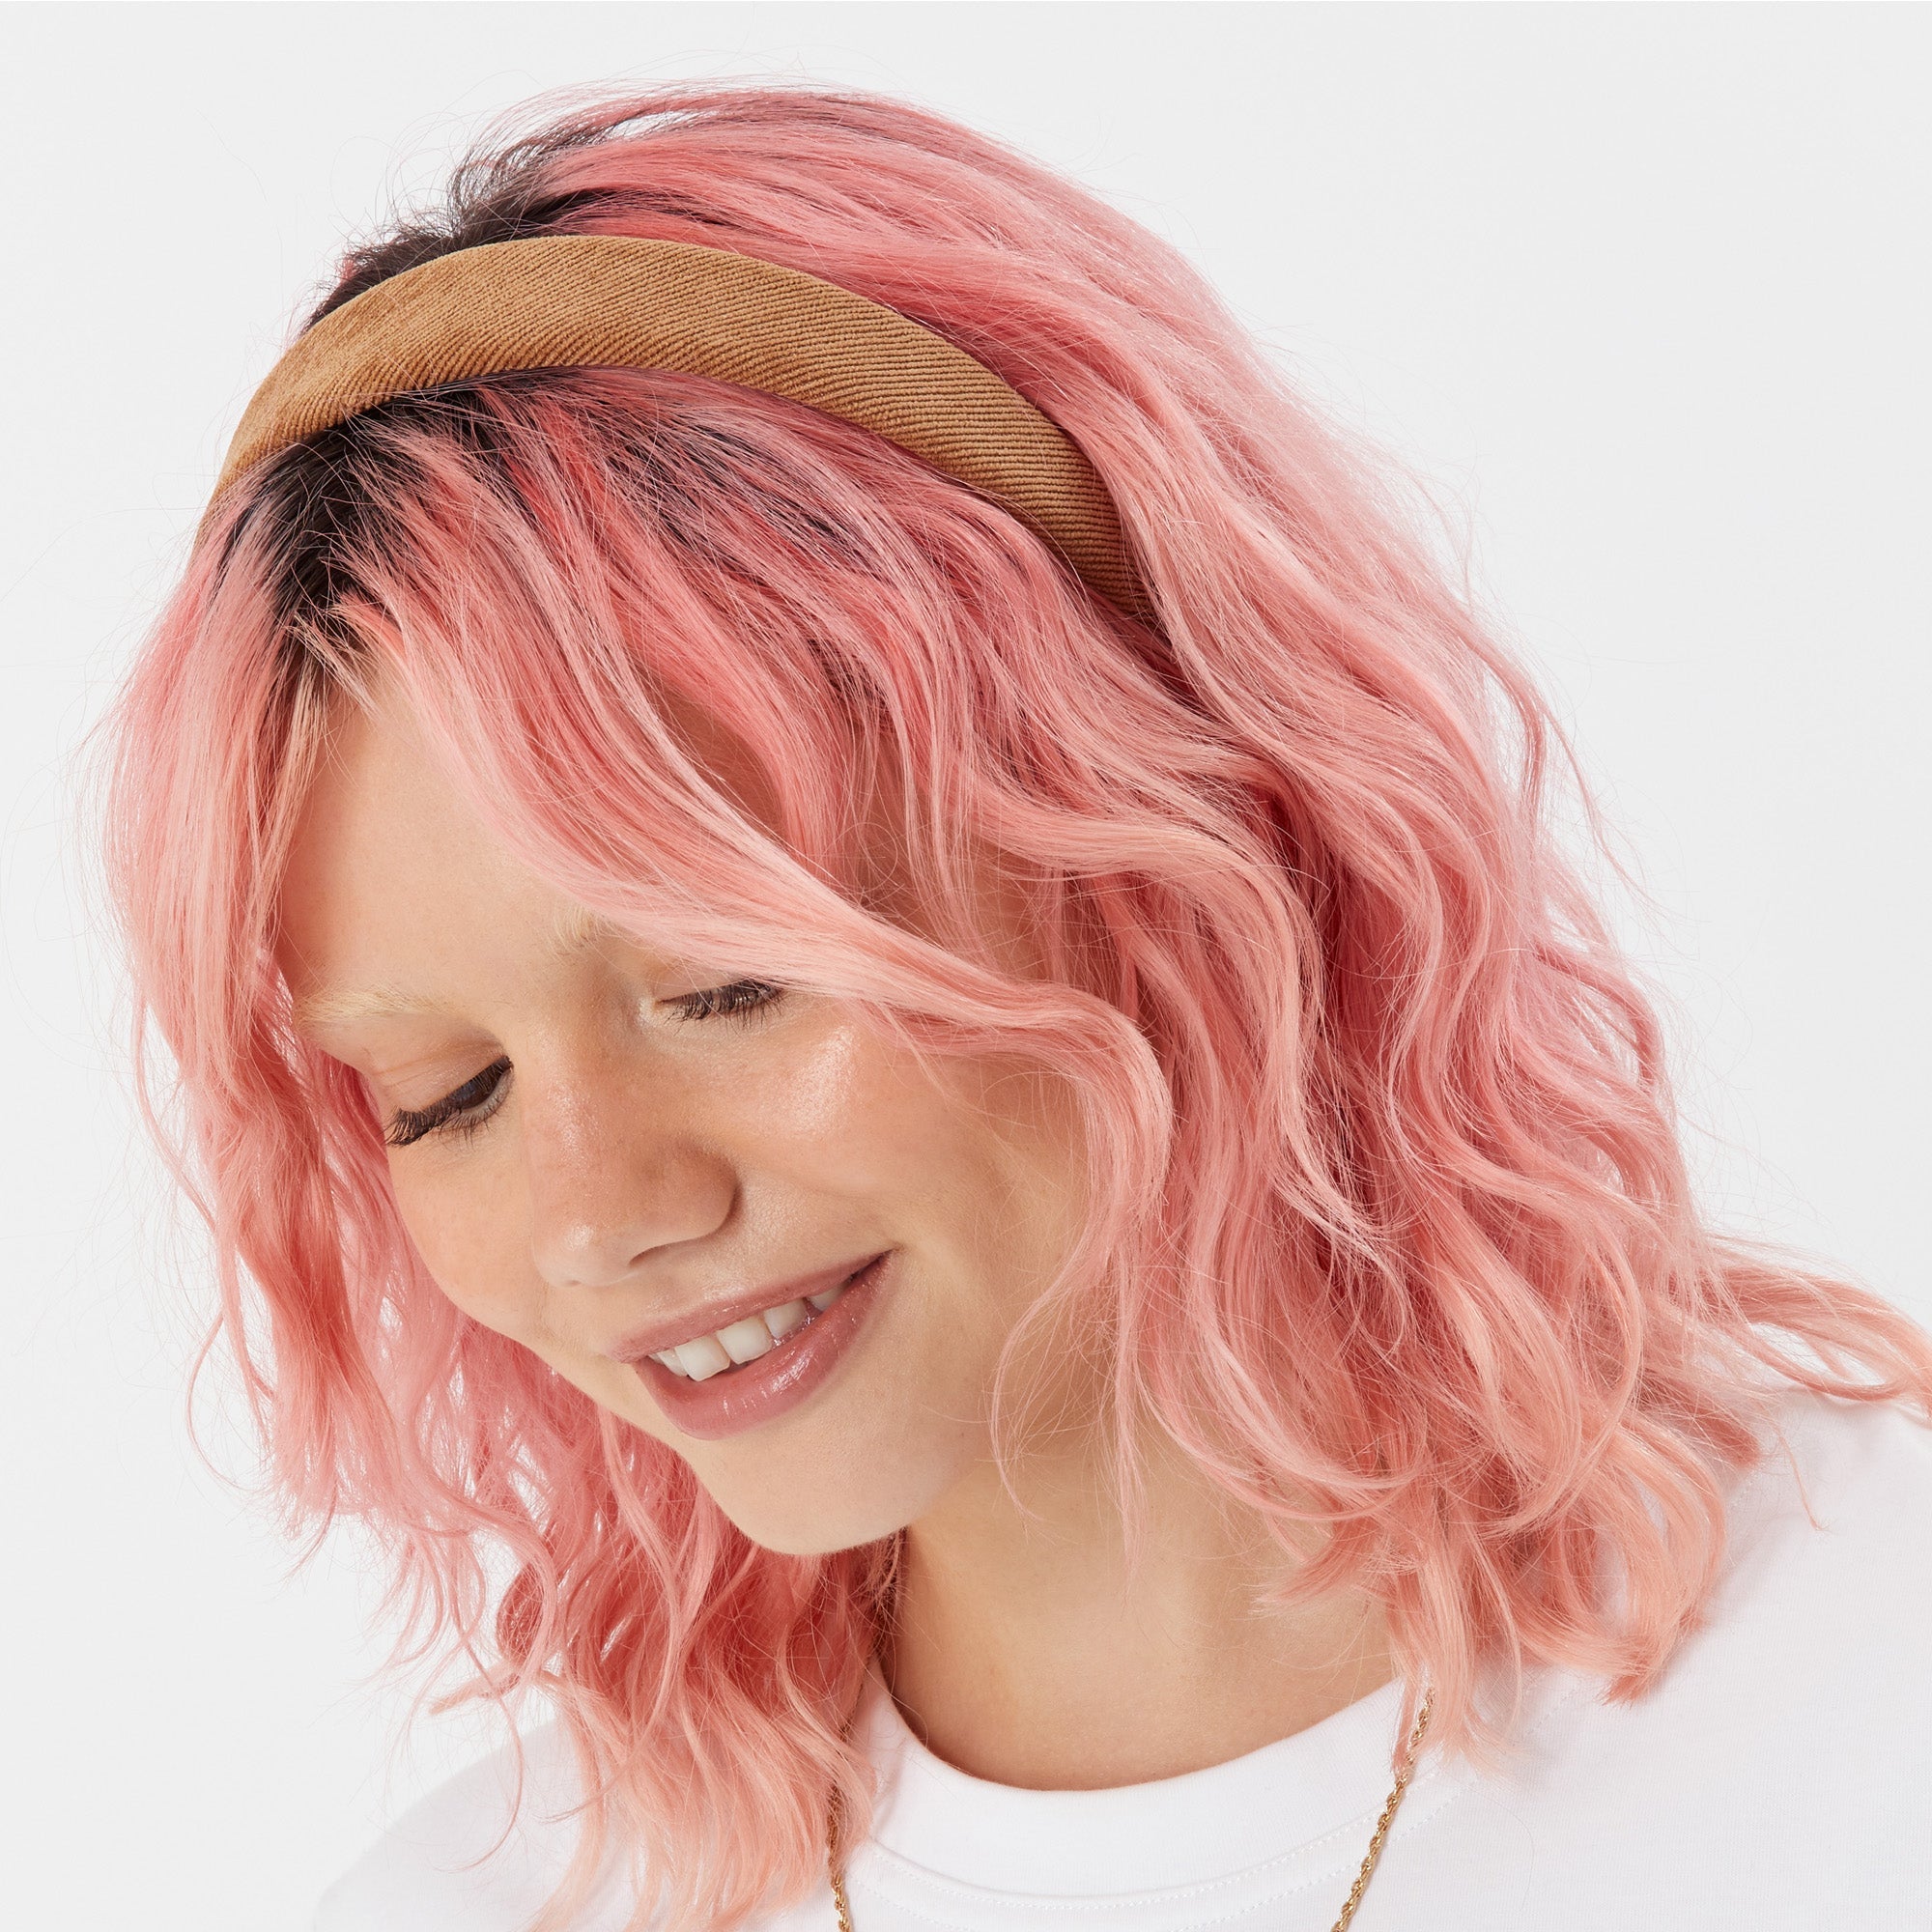 Accessorize London Women's Tan Textured Headband